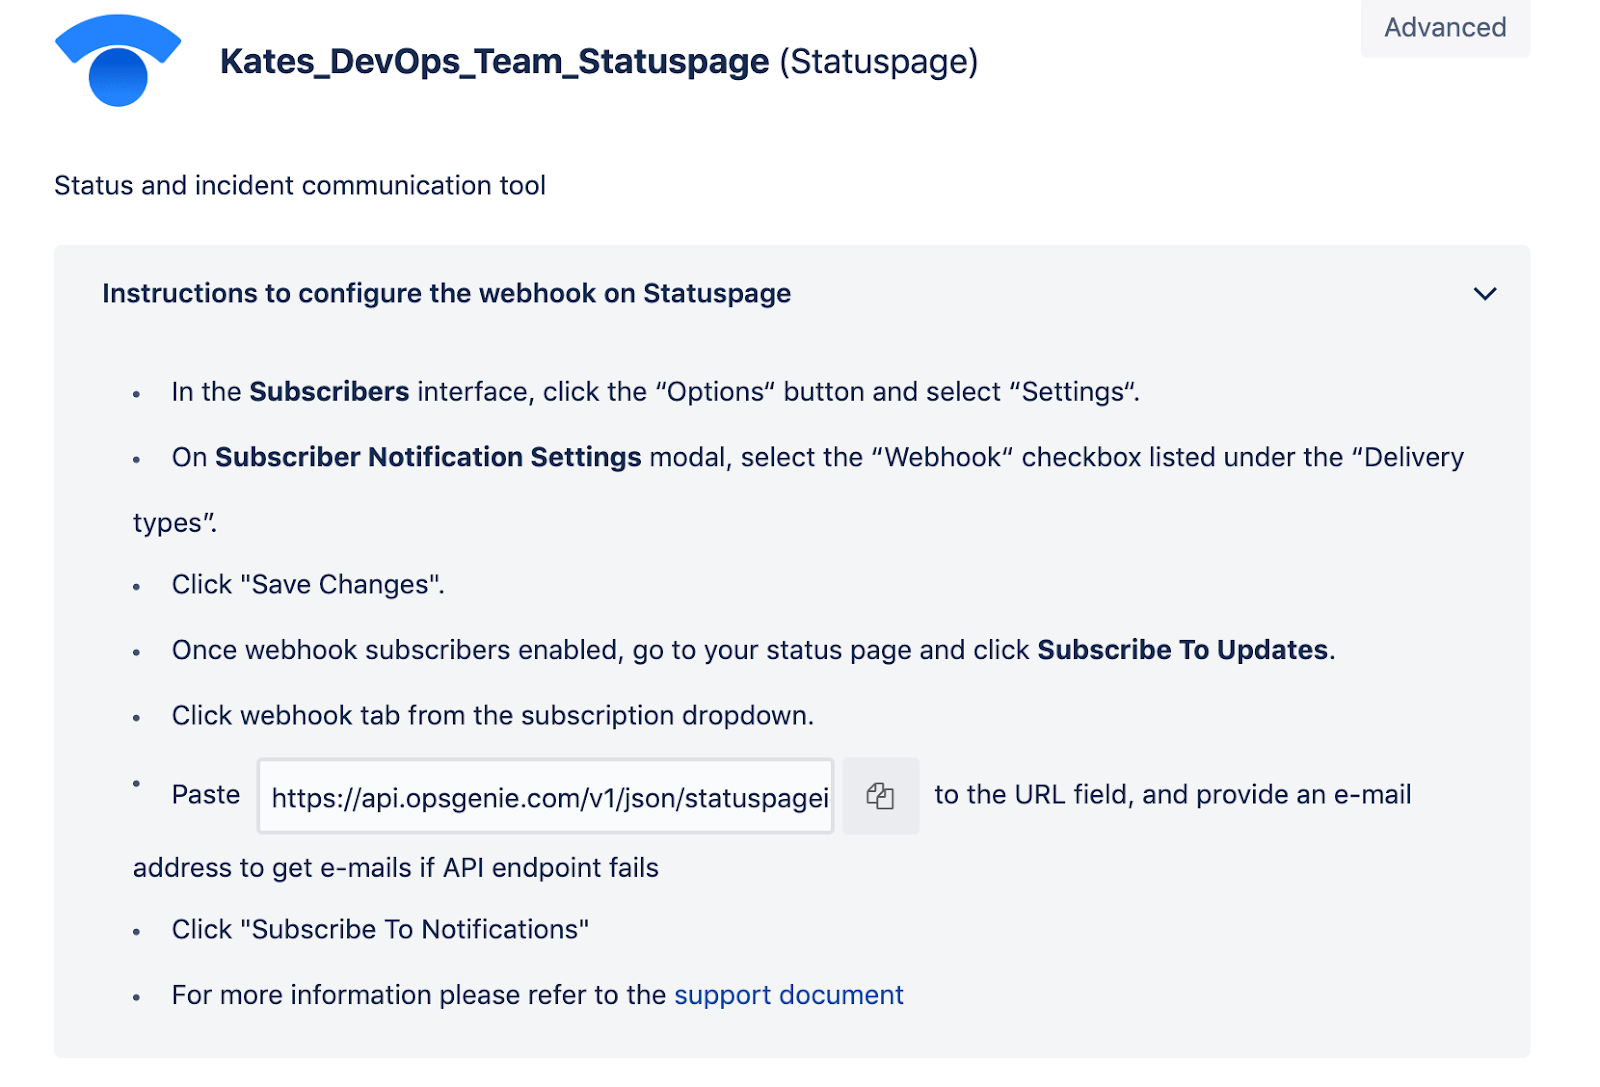 Instructions to configure webhook on Statuspage